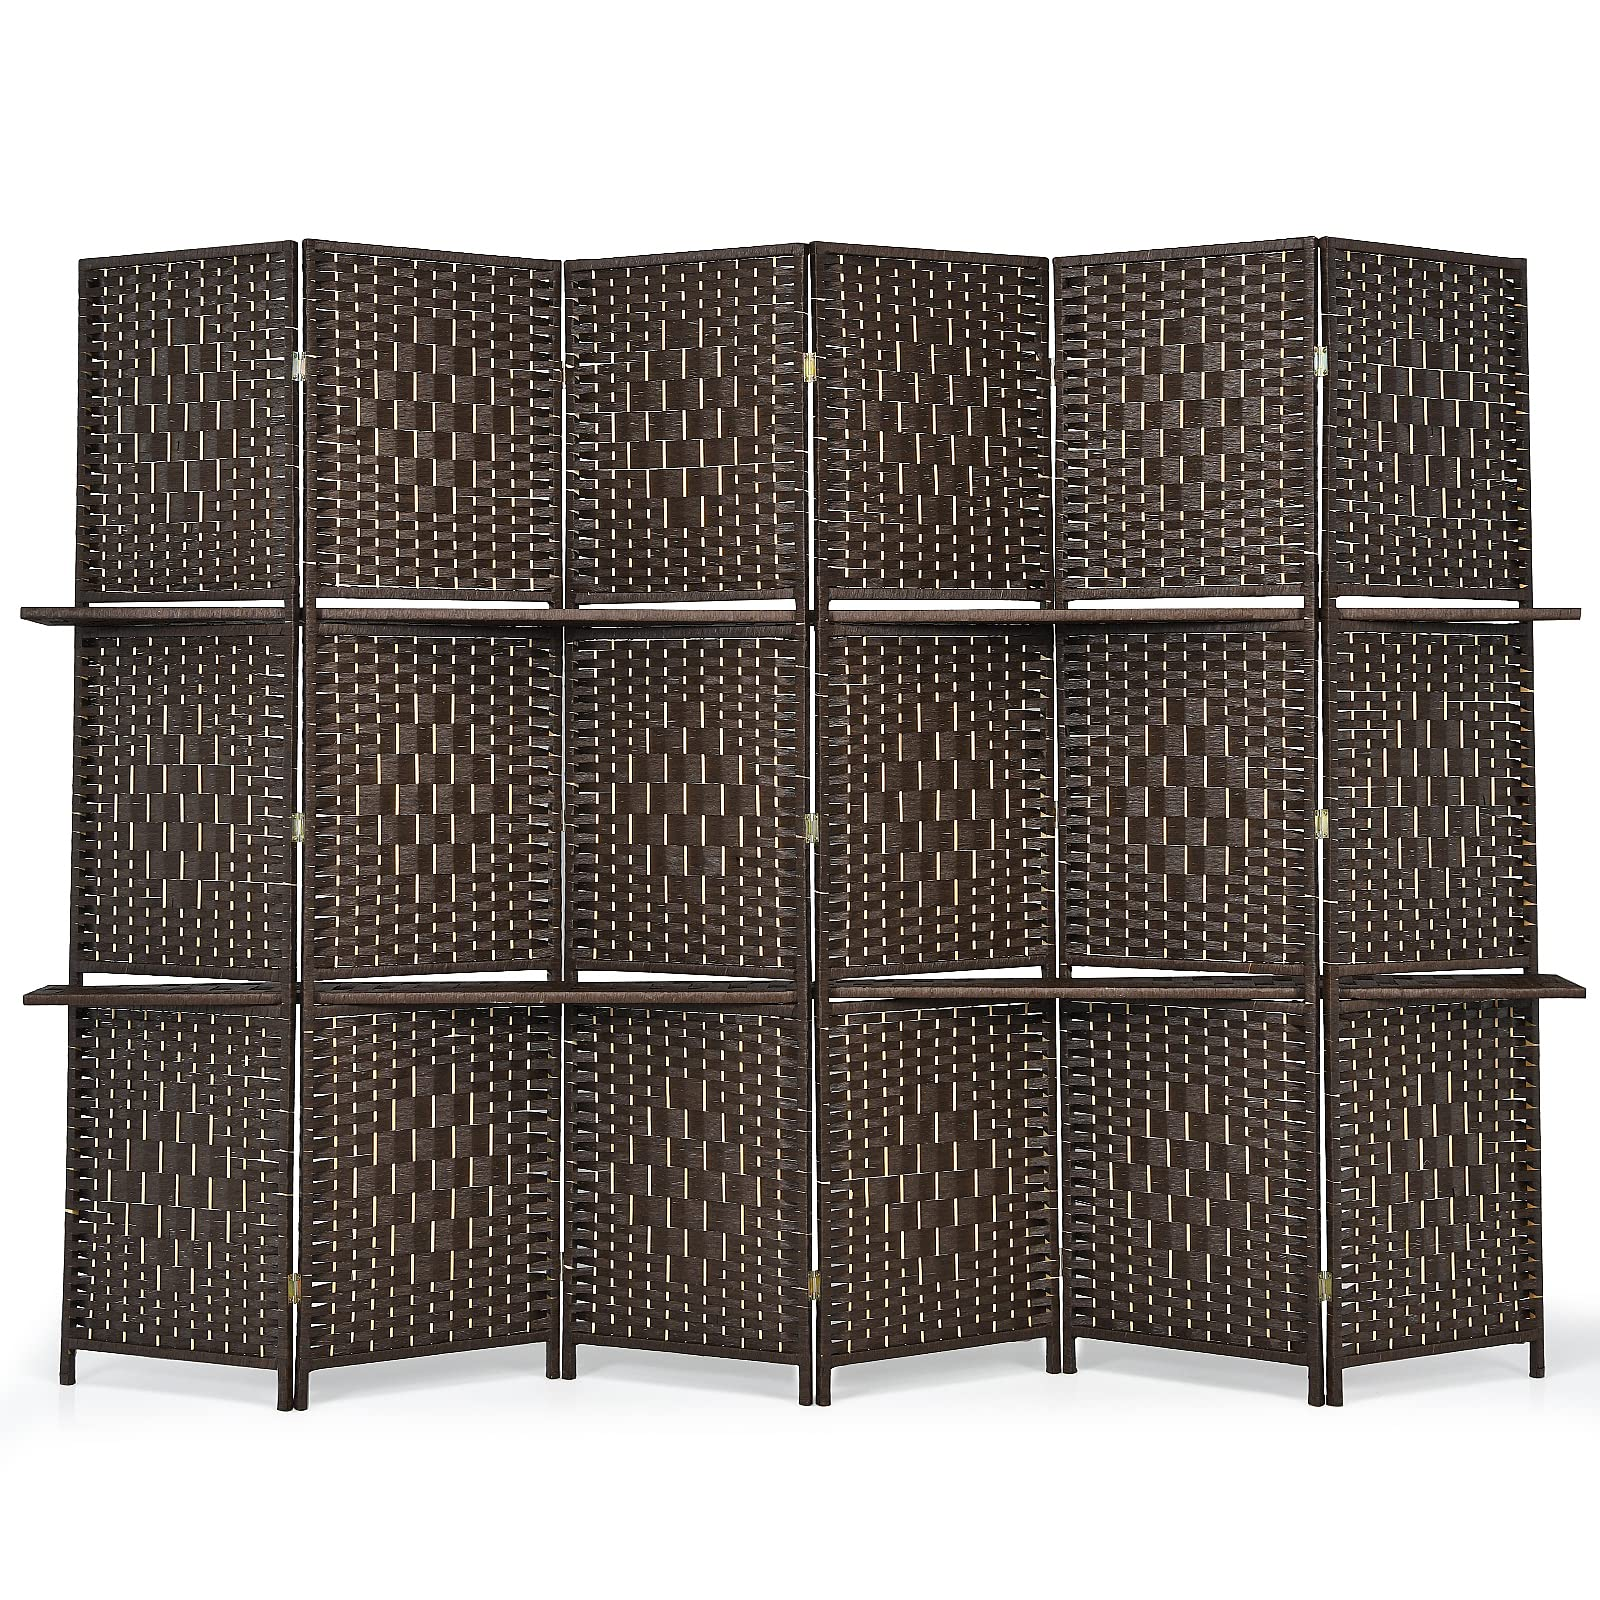 Giantex 6 Panel Room Divider Screen, 6Ft Hand-Woven Rattan Wood Room Divider w/ Shelves